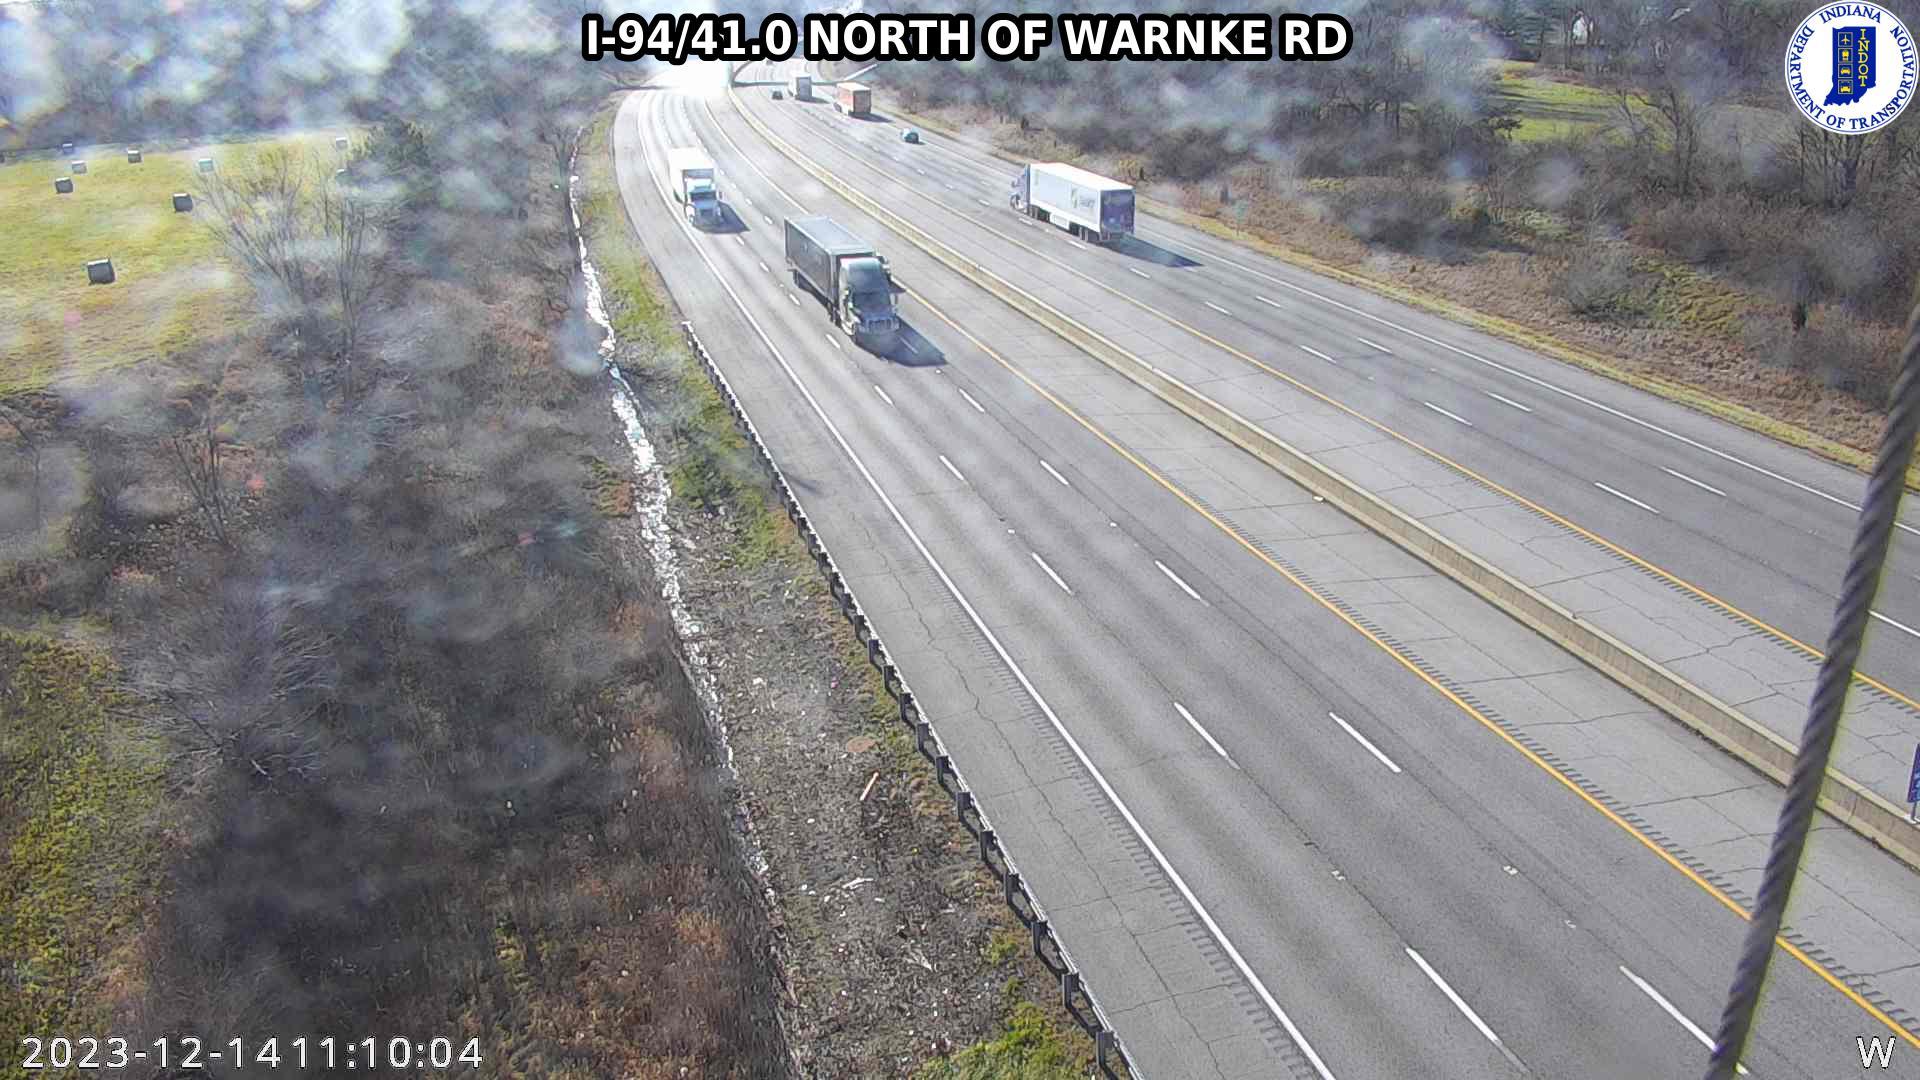 Traffic Cam Ambler: I-94: I-94/41.0 NORTH OF WARNKE RD: I-94/41.0 NORTH OF WARNKE RD Player